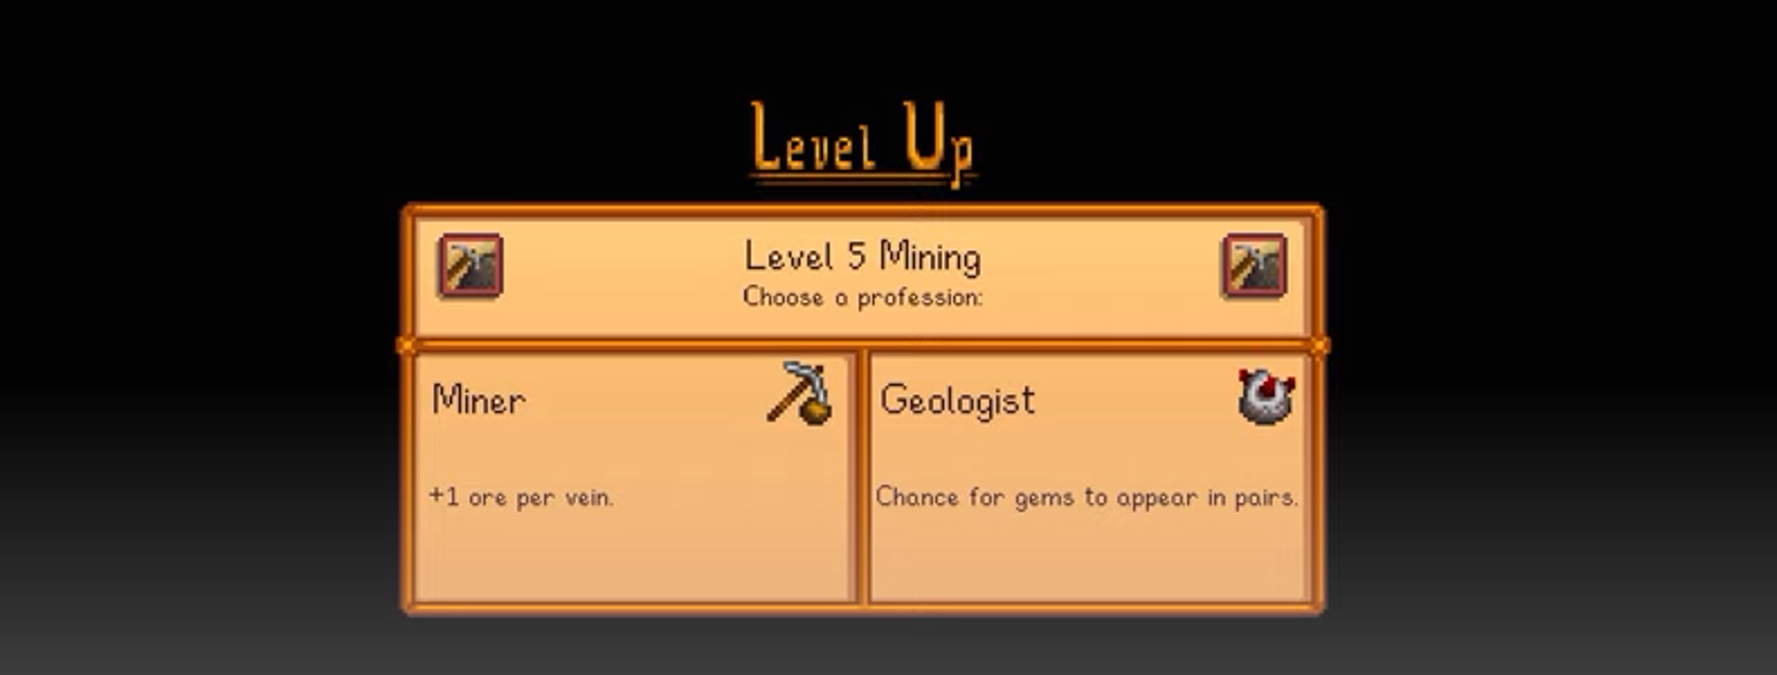 Level 5 Mining Miner or Geologist in Stardew Valley